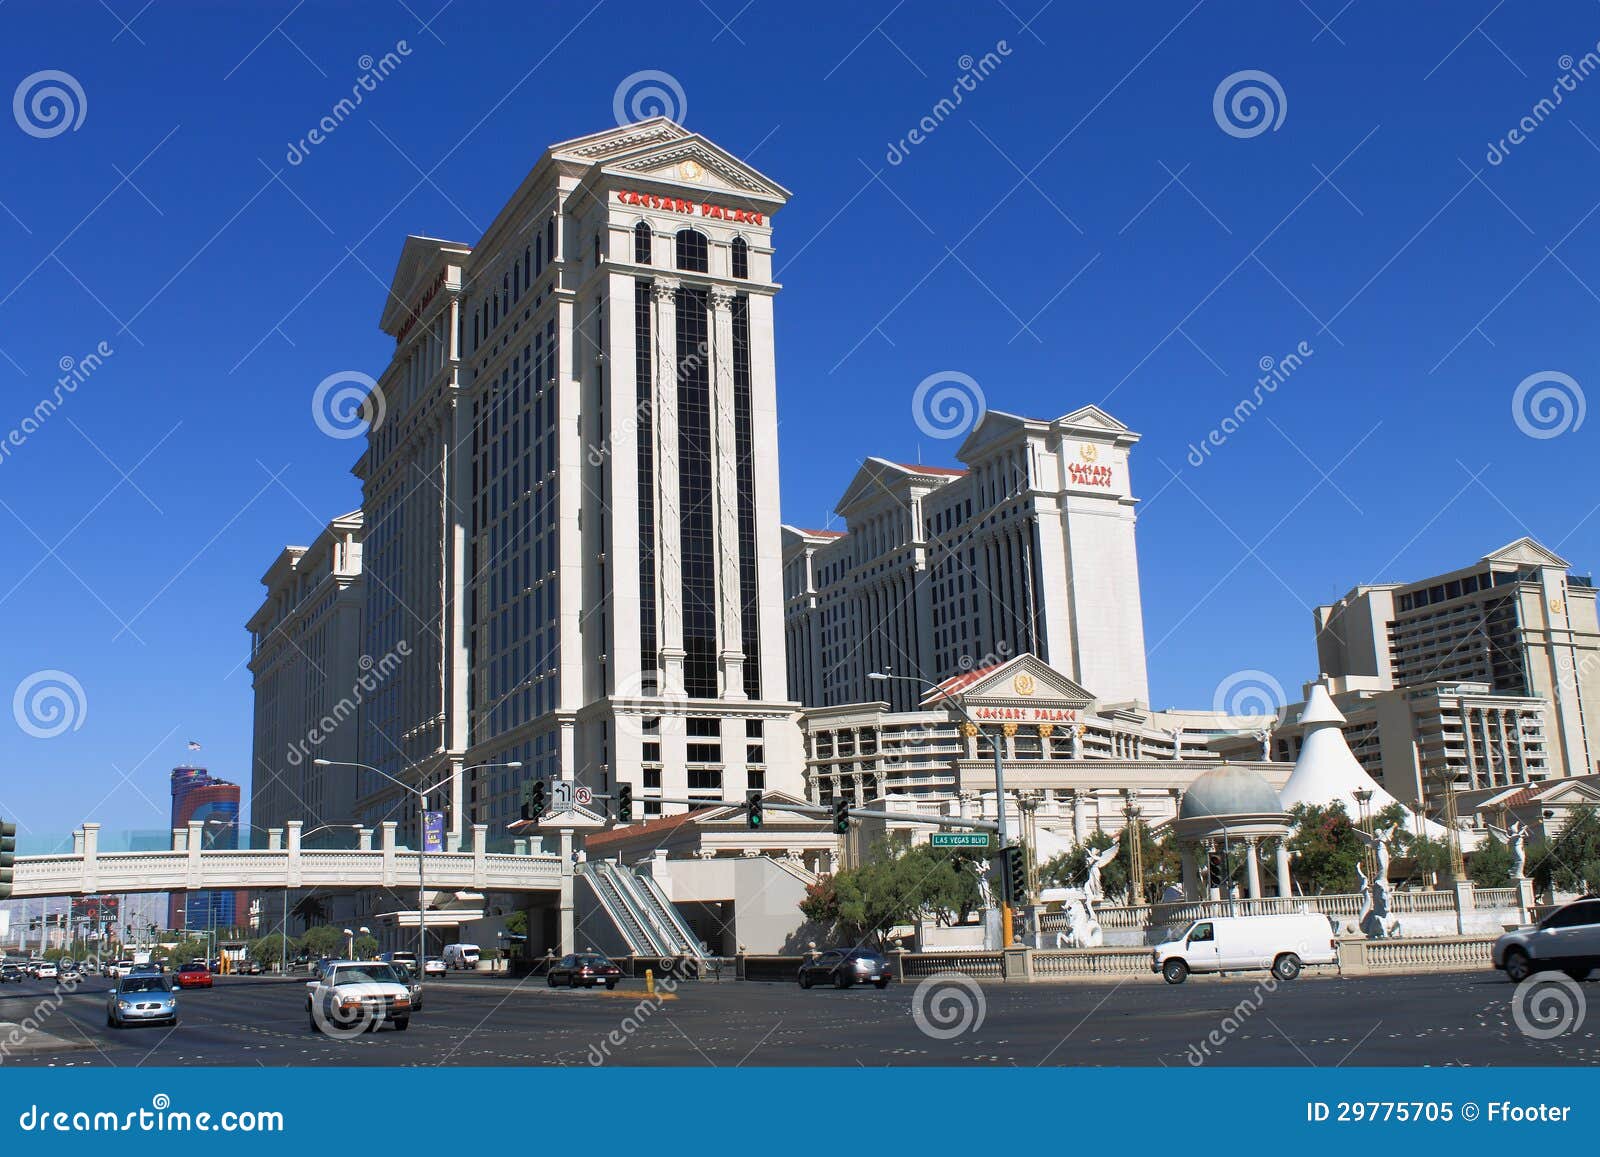 Caesars Palace Casino And Hotel In Las Vegas